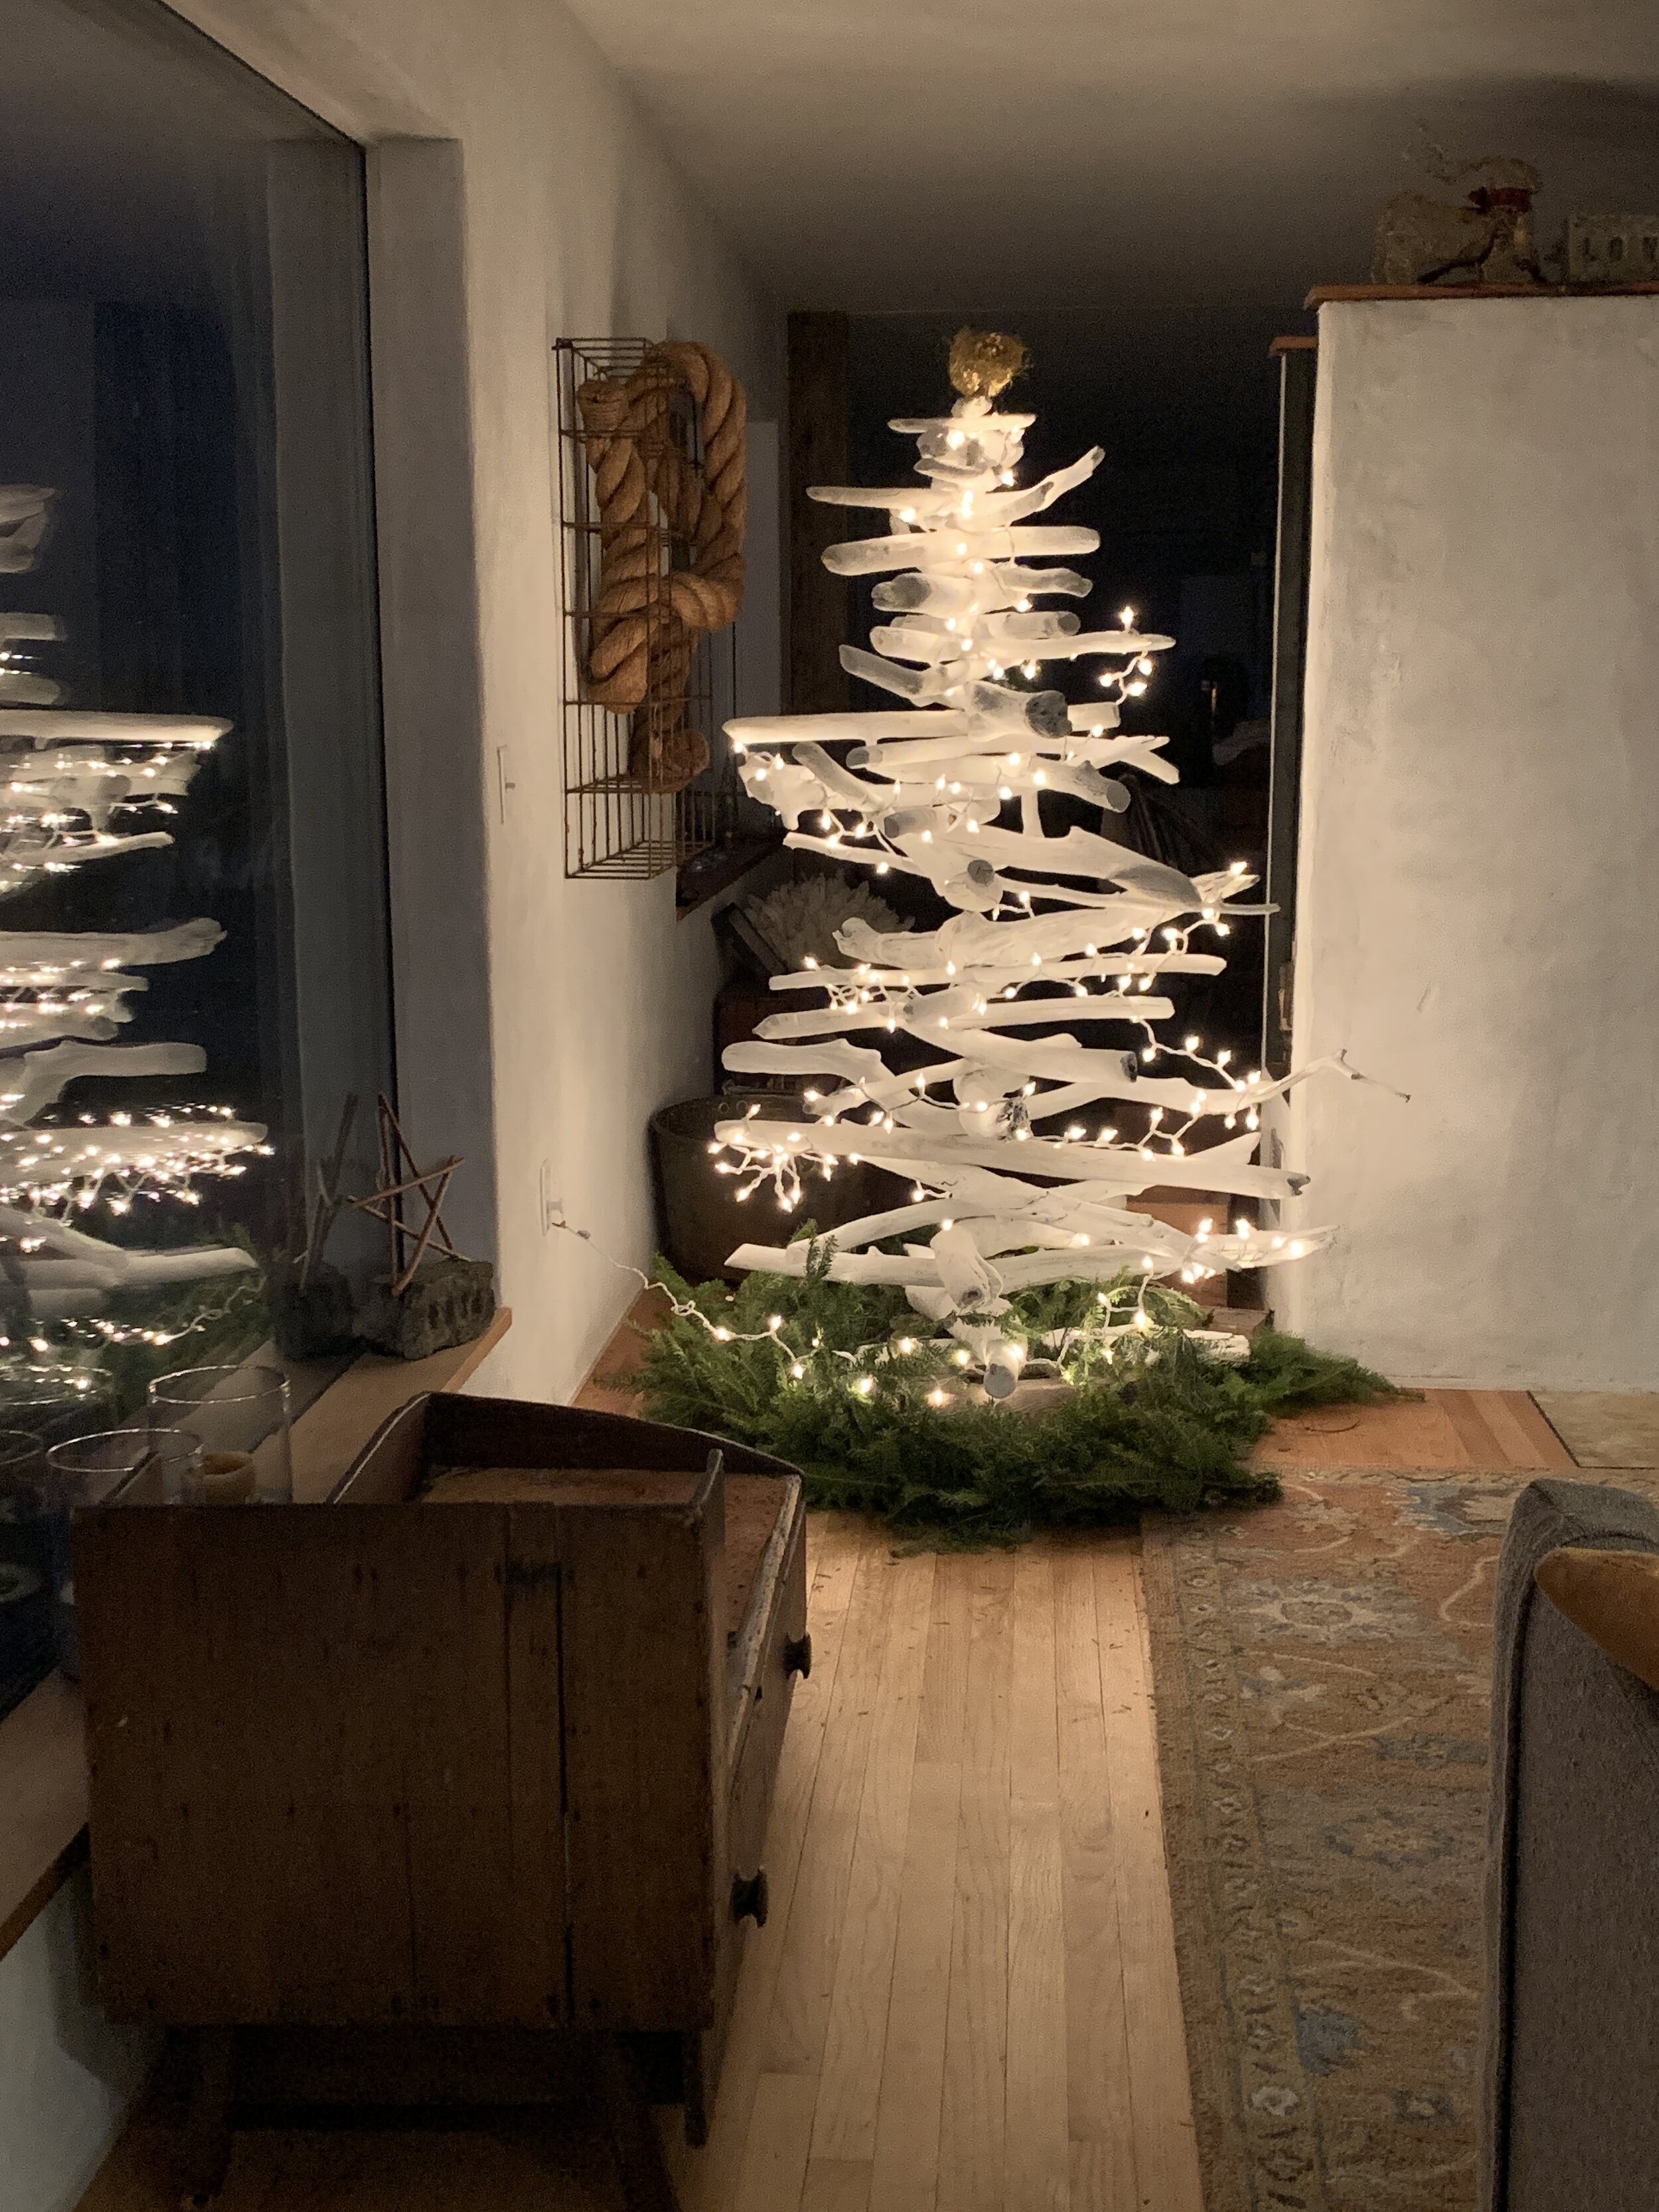 Copy of driftwood Christmas tree